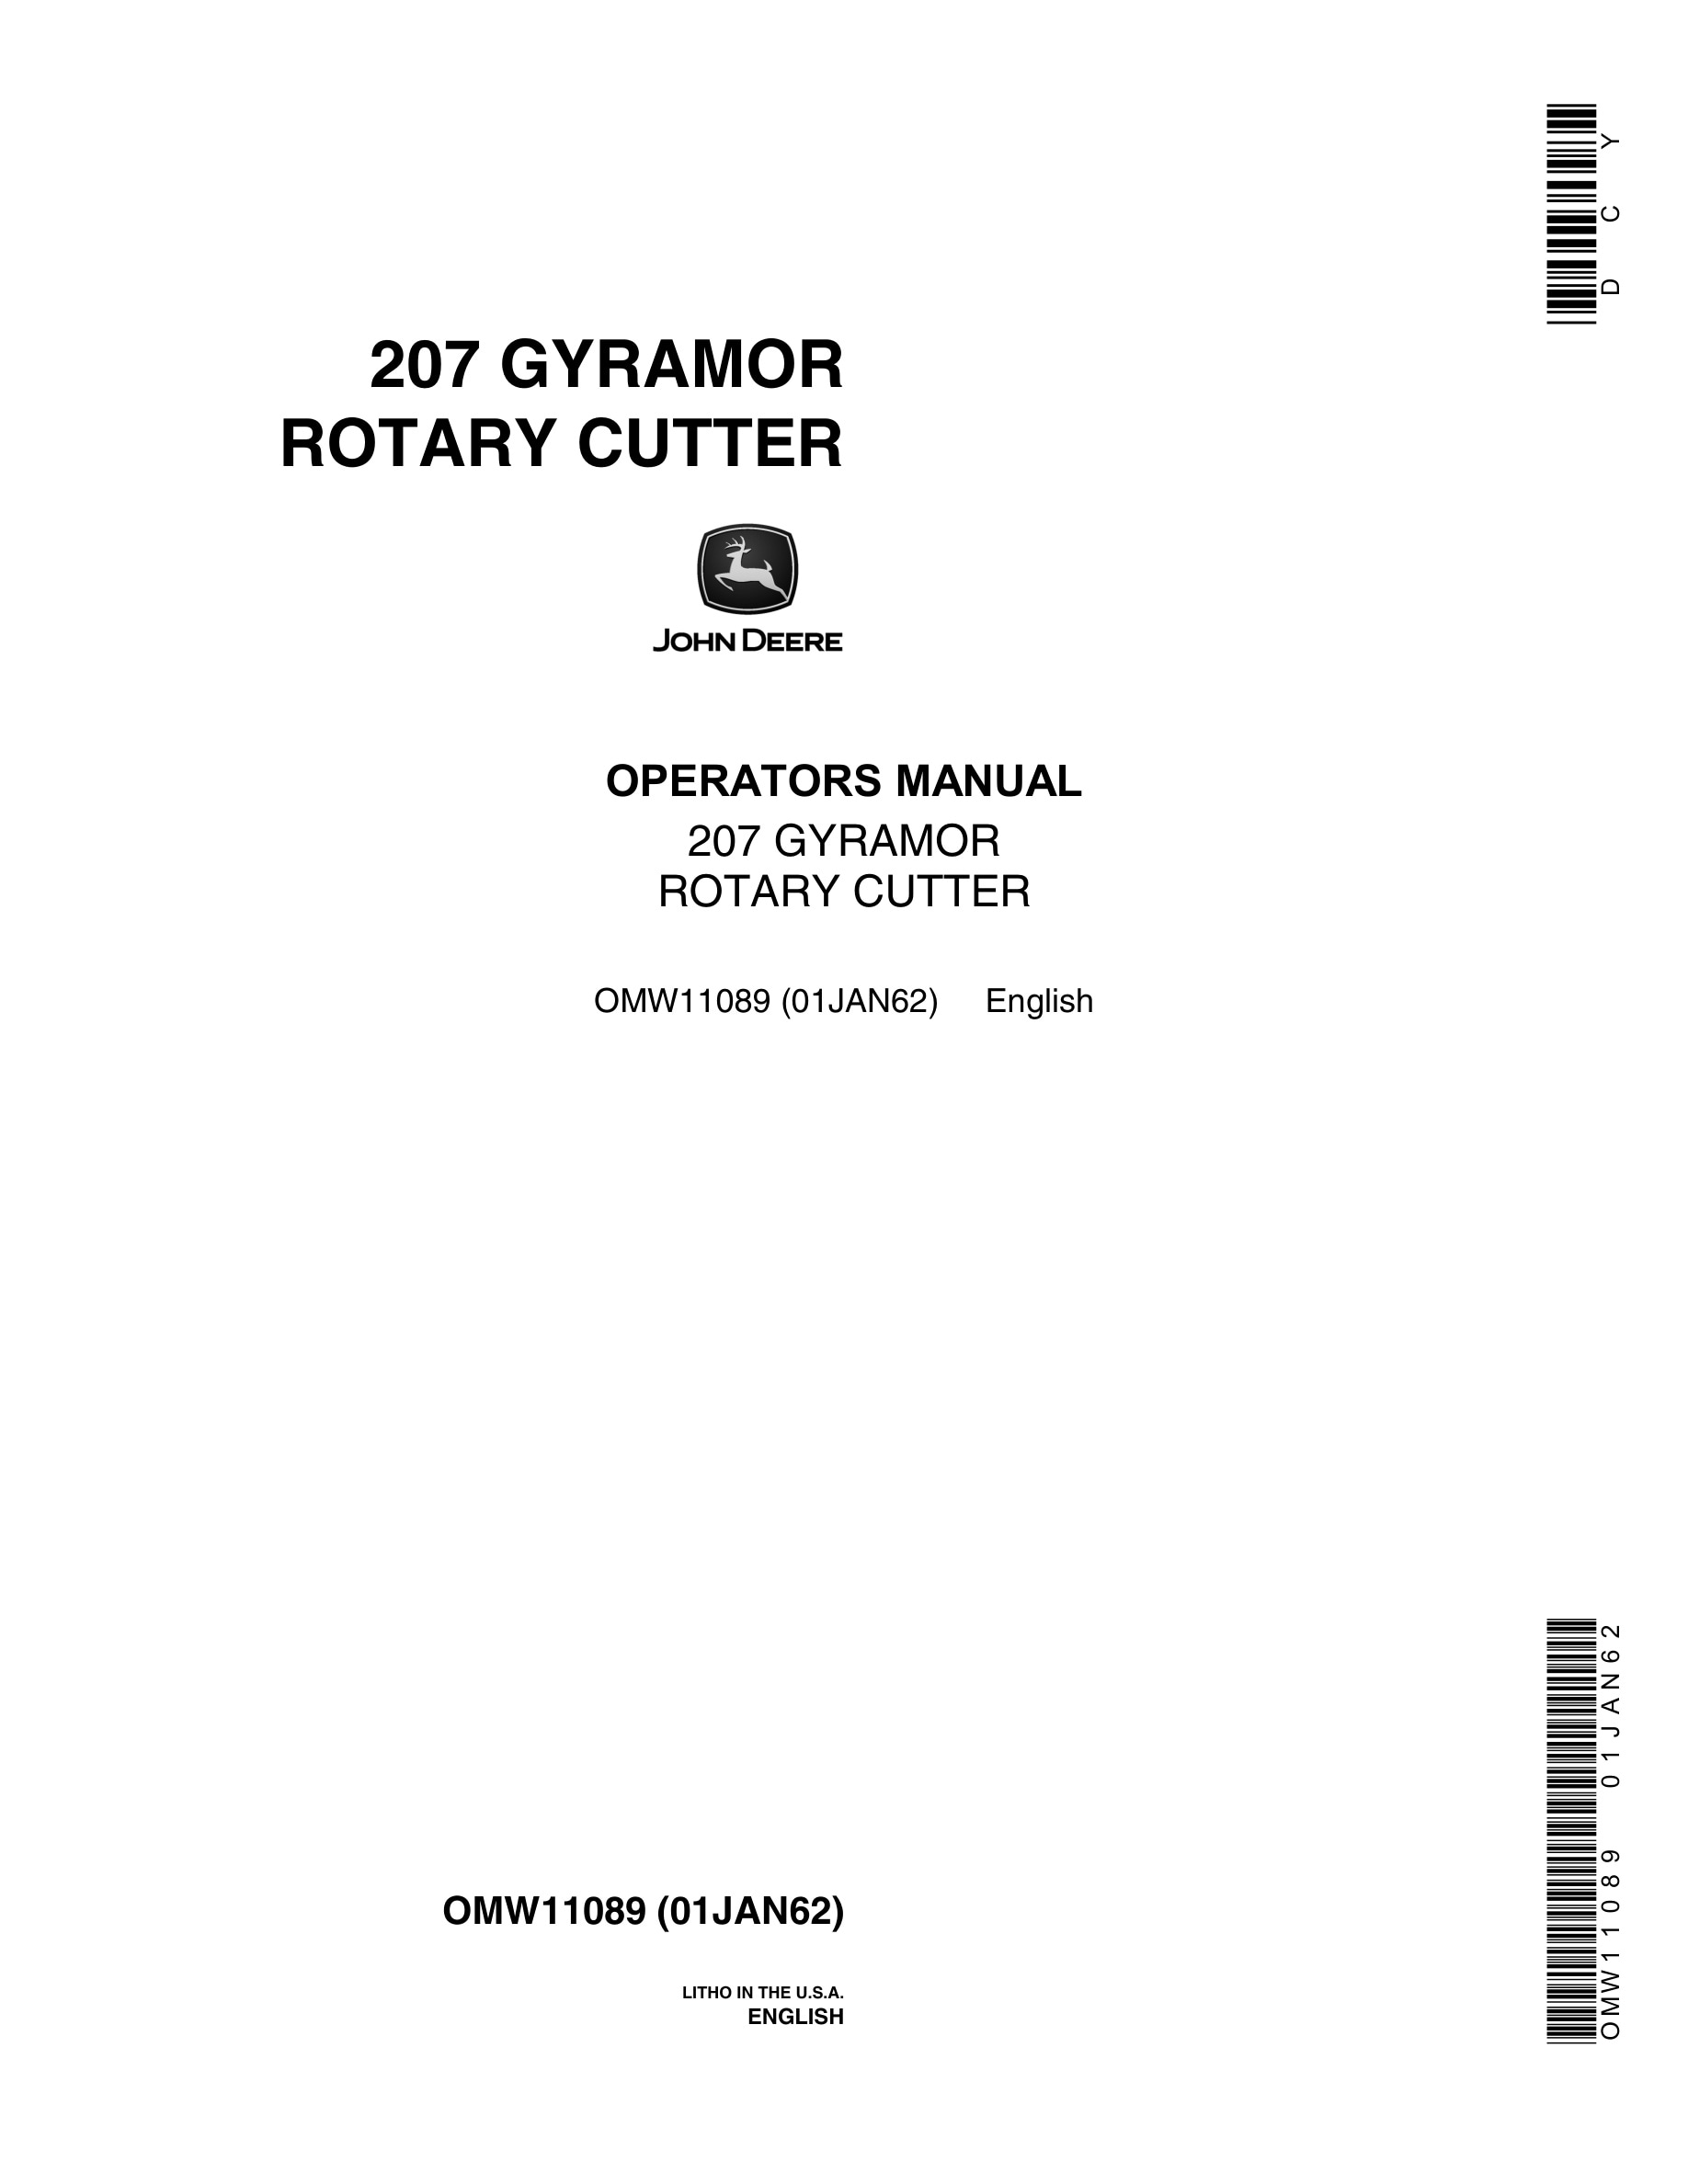 John Deere 207 Gyramor Rotary Cutter Operator Manual OMW11089-1